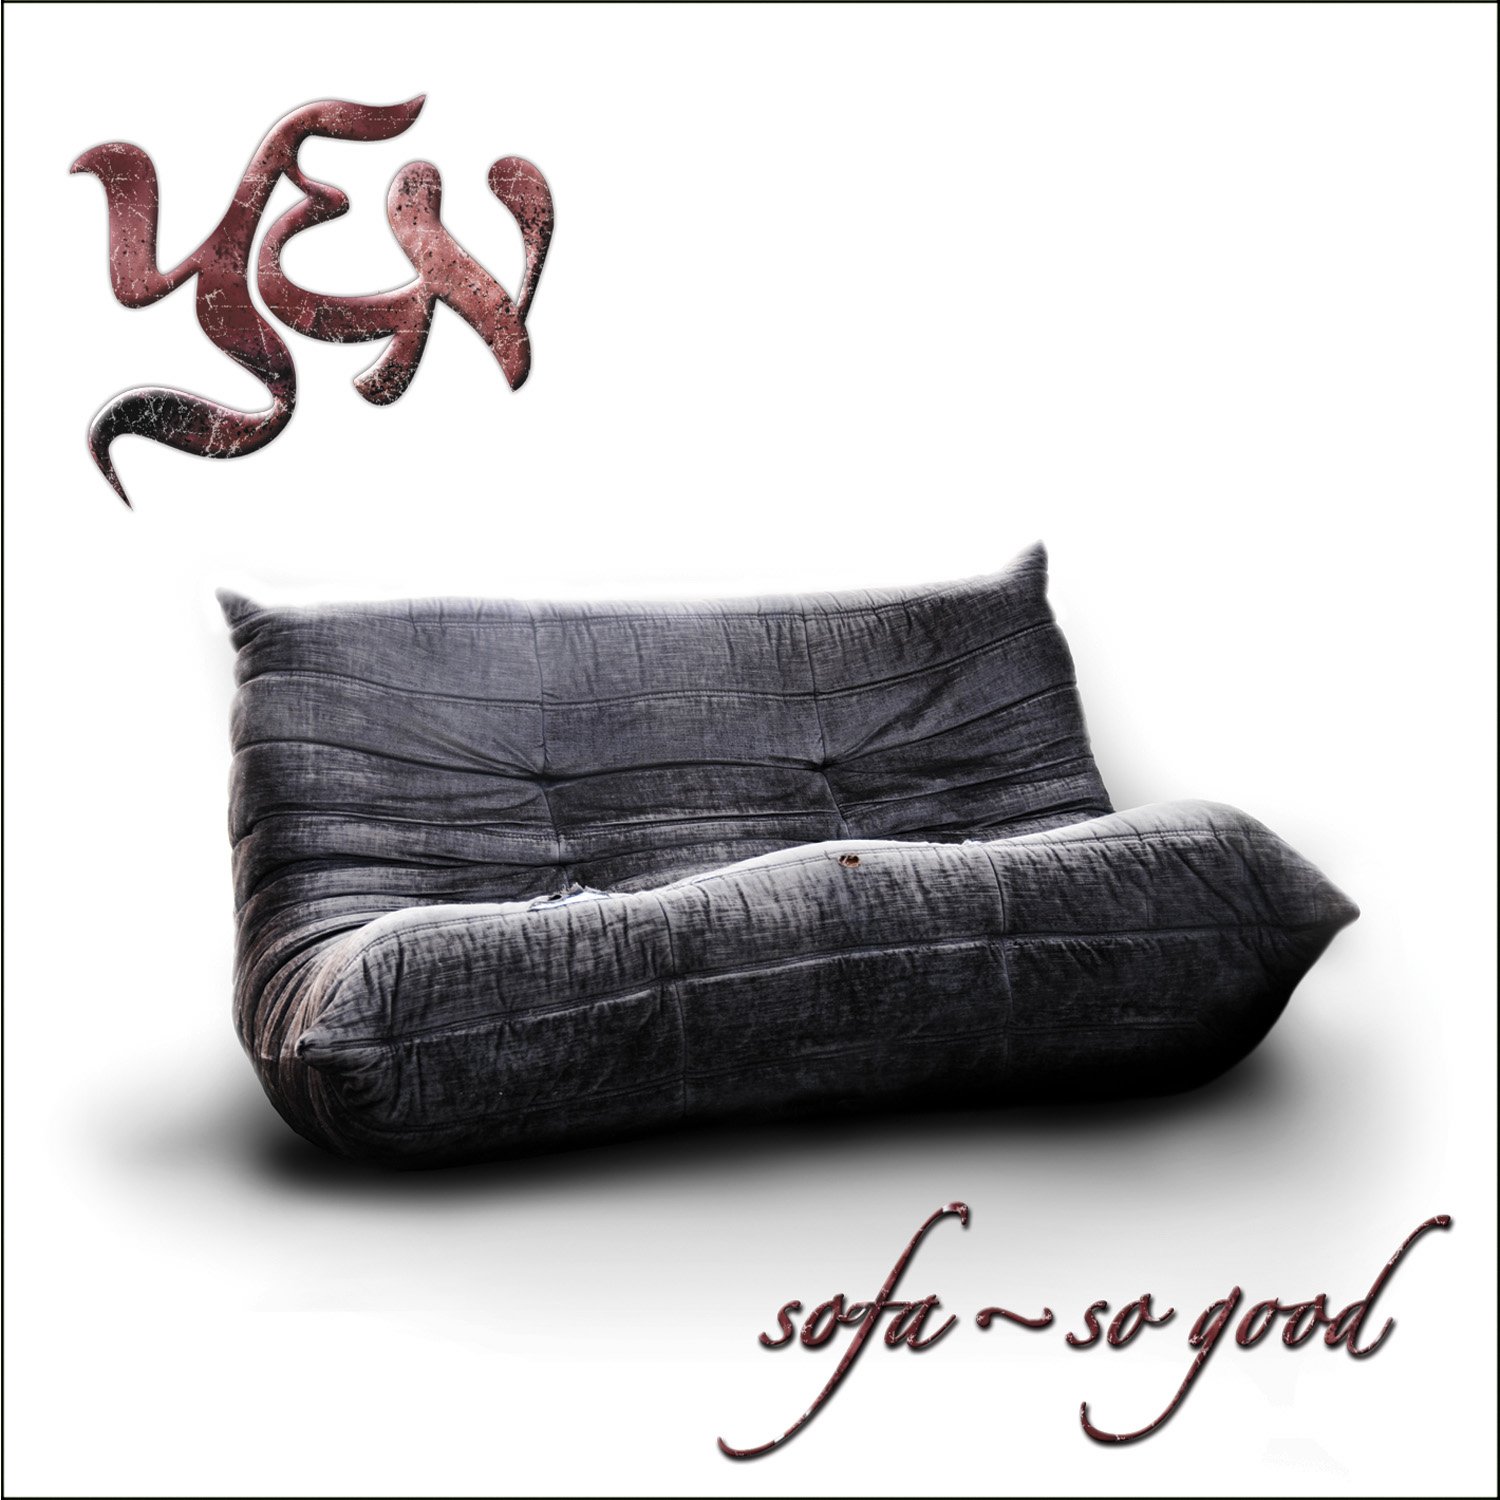 sofa - so good — YEN | Last.fm